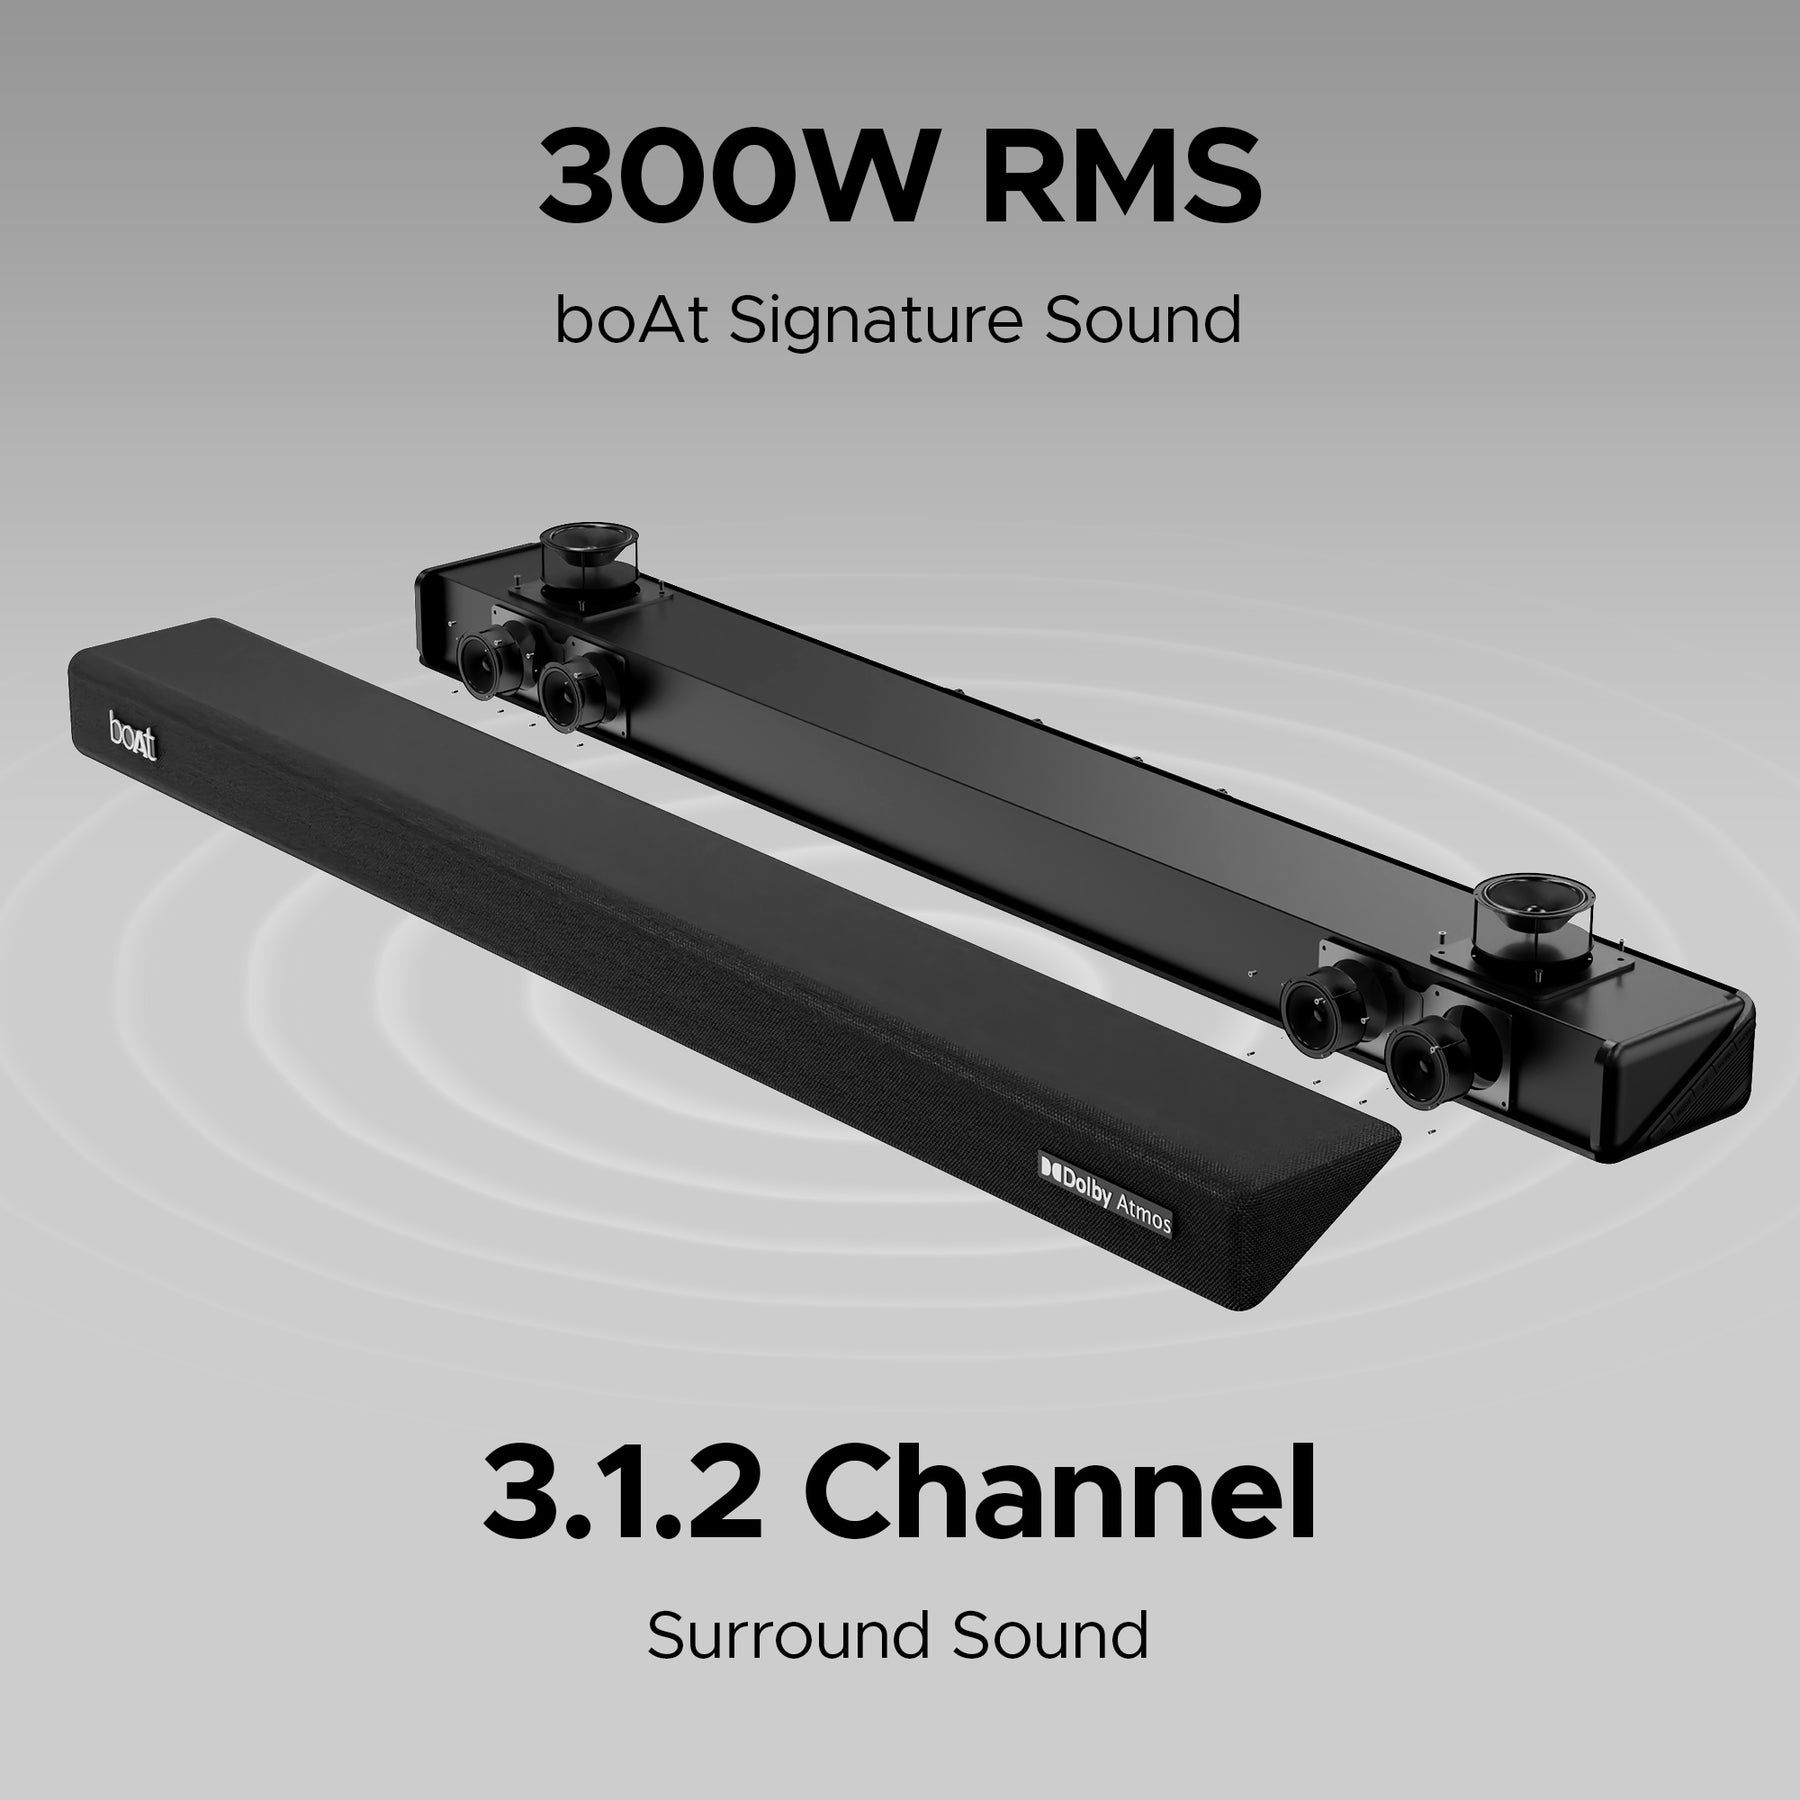 boAt Aavante Bar 4100DA | Soundbar with 300W RMS boAt Signature Sound, 3.1.2 Channel Surround Sound, Bluetooth v5.3